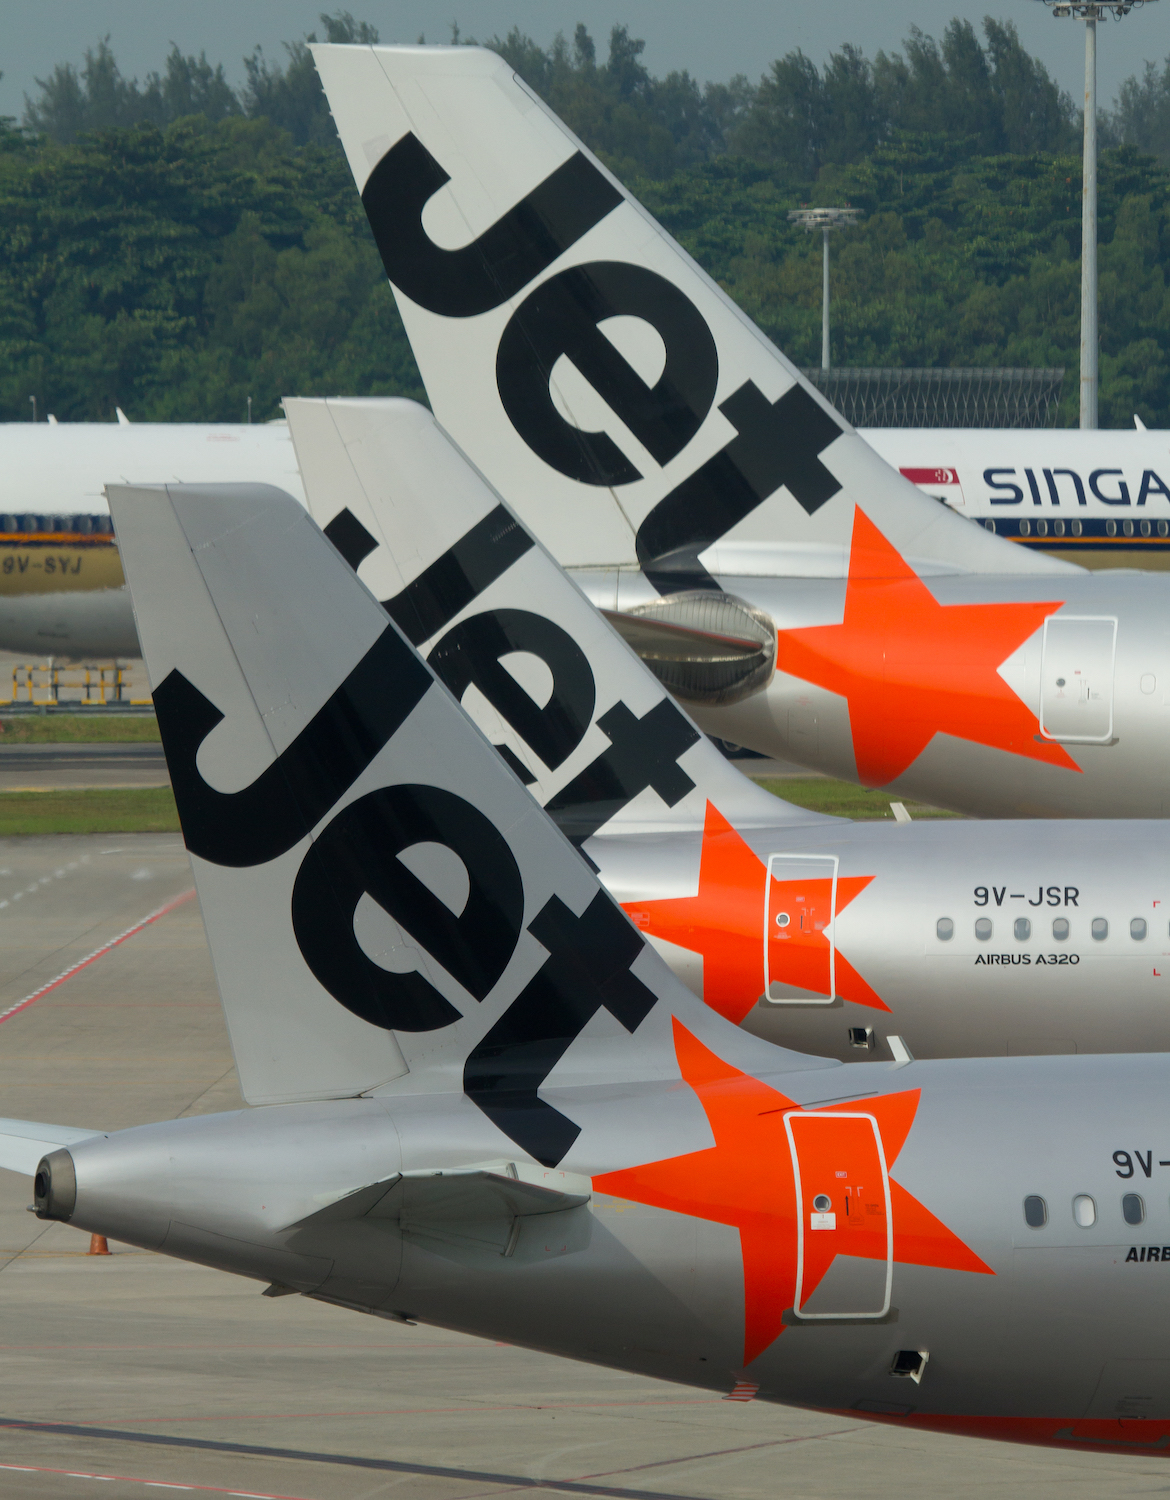 Jetstar Asia aircraft in Singapore.